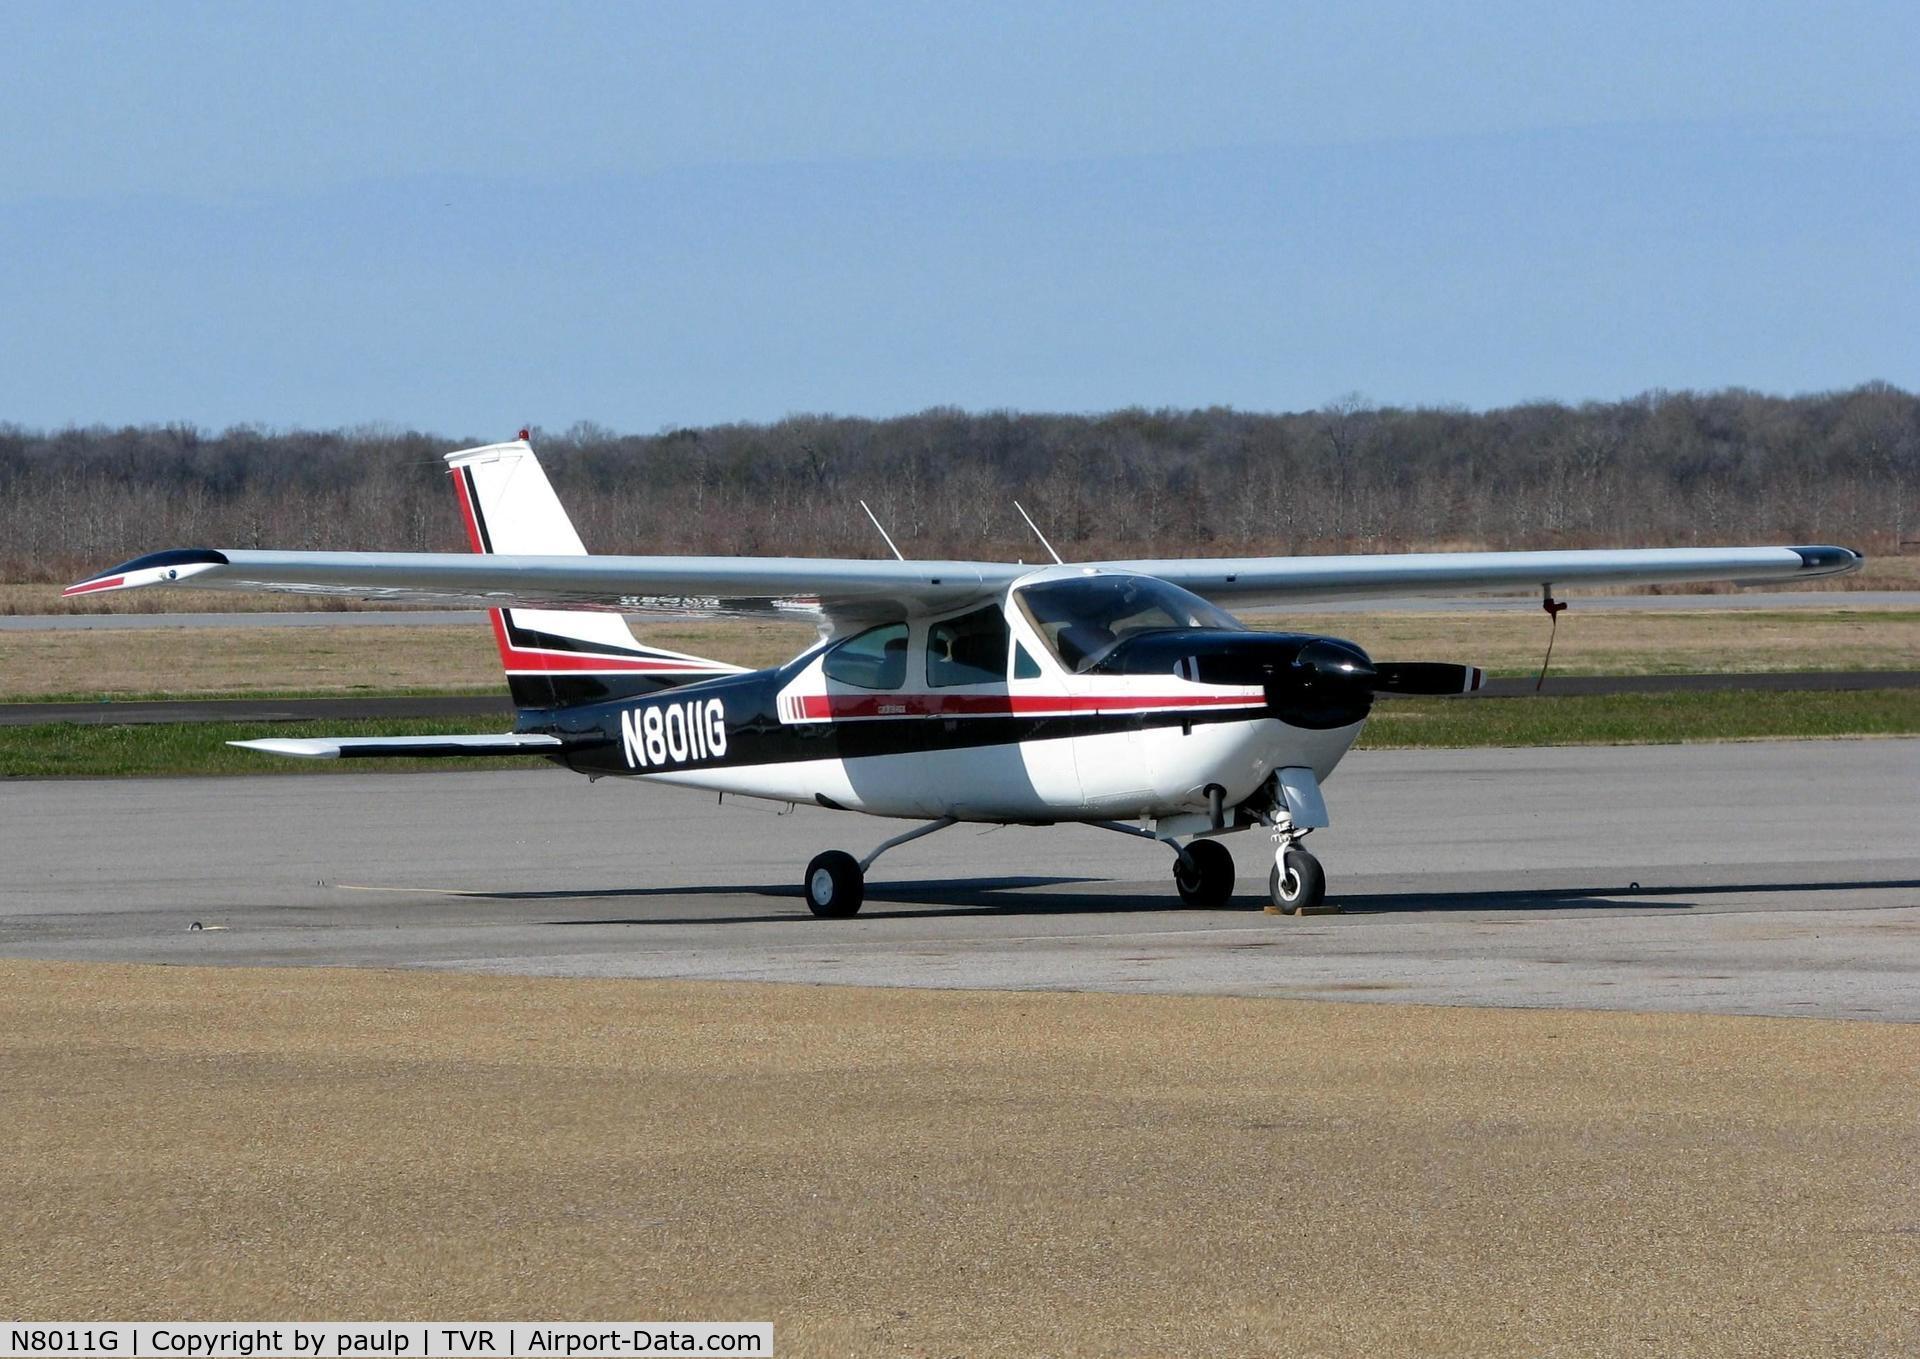 N8011G, 1970 Cessna 177RG Cardinal C/N 177RG0011, At the Tallulah/Vicksburg airport. A nice looking Cardinal!